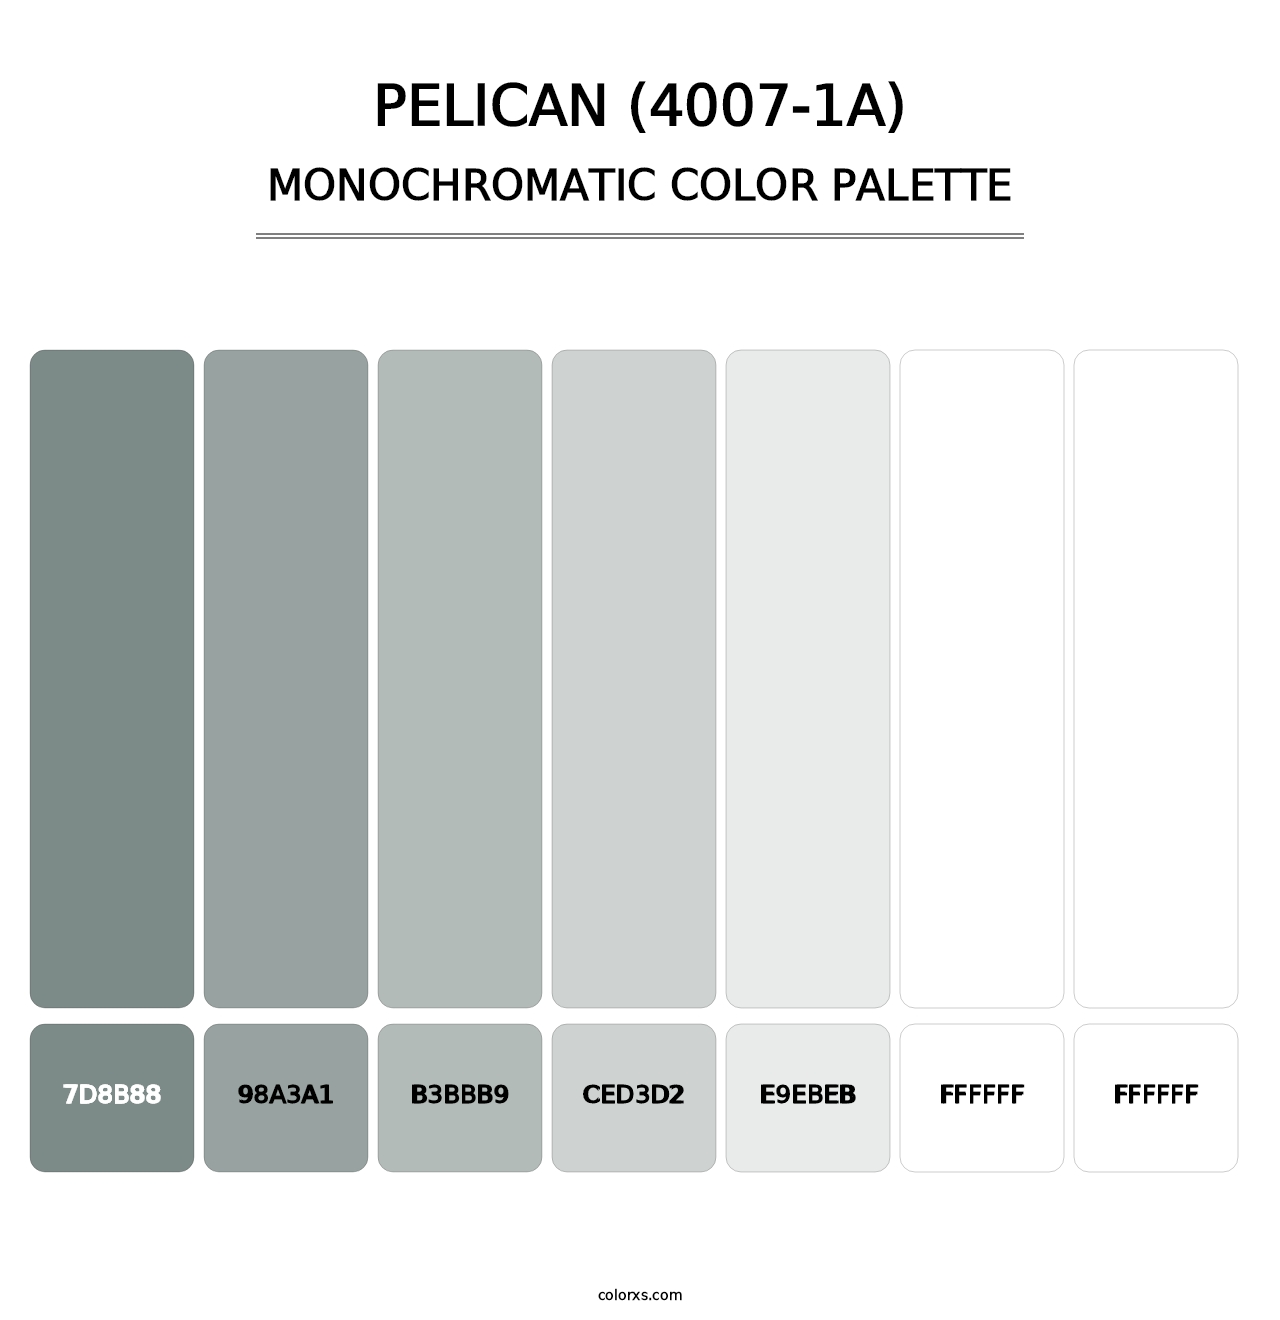 Pelican (4007-1A) - Monochromatic Color Palette